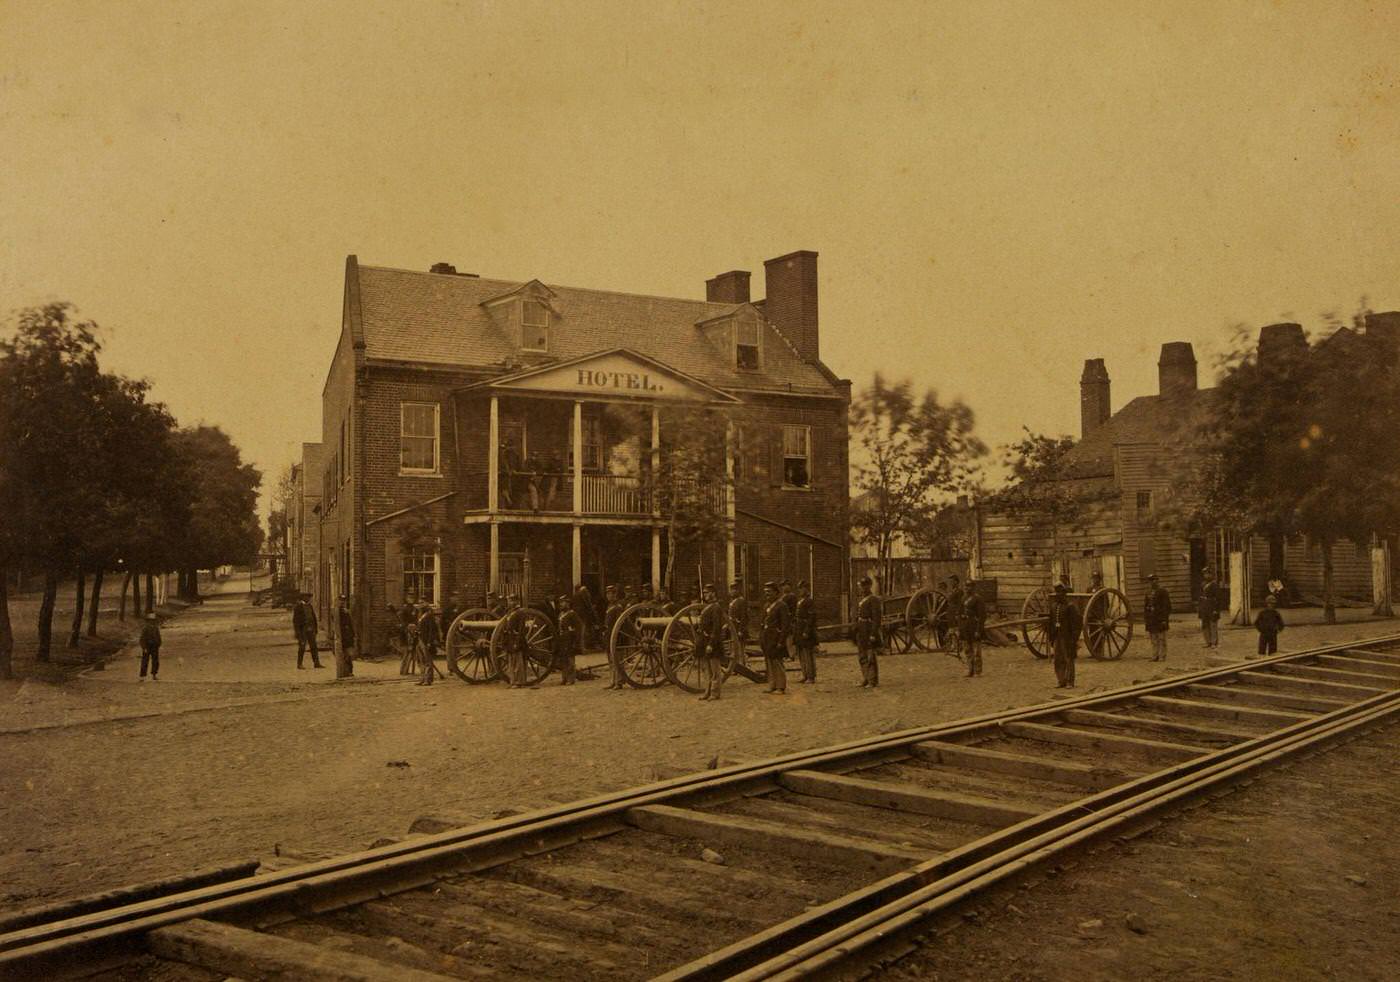 Hotel entrance to Long Bridge, Washington, D.C., 1863